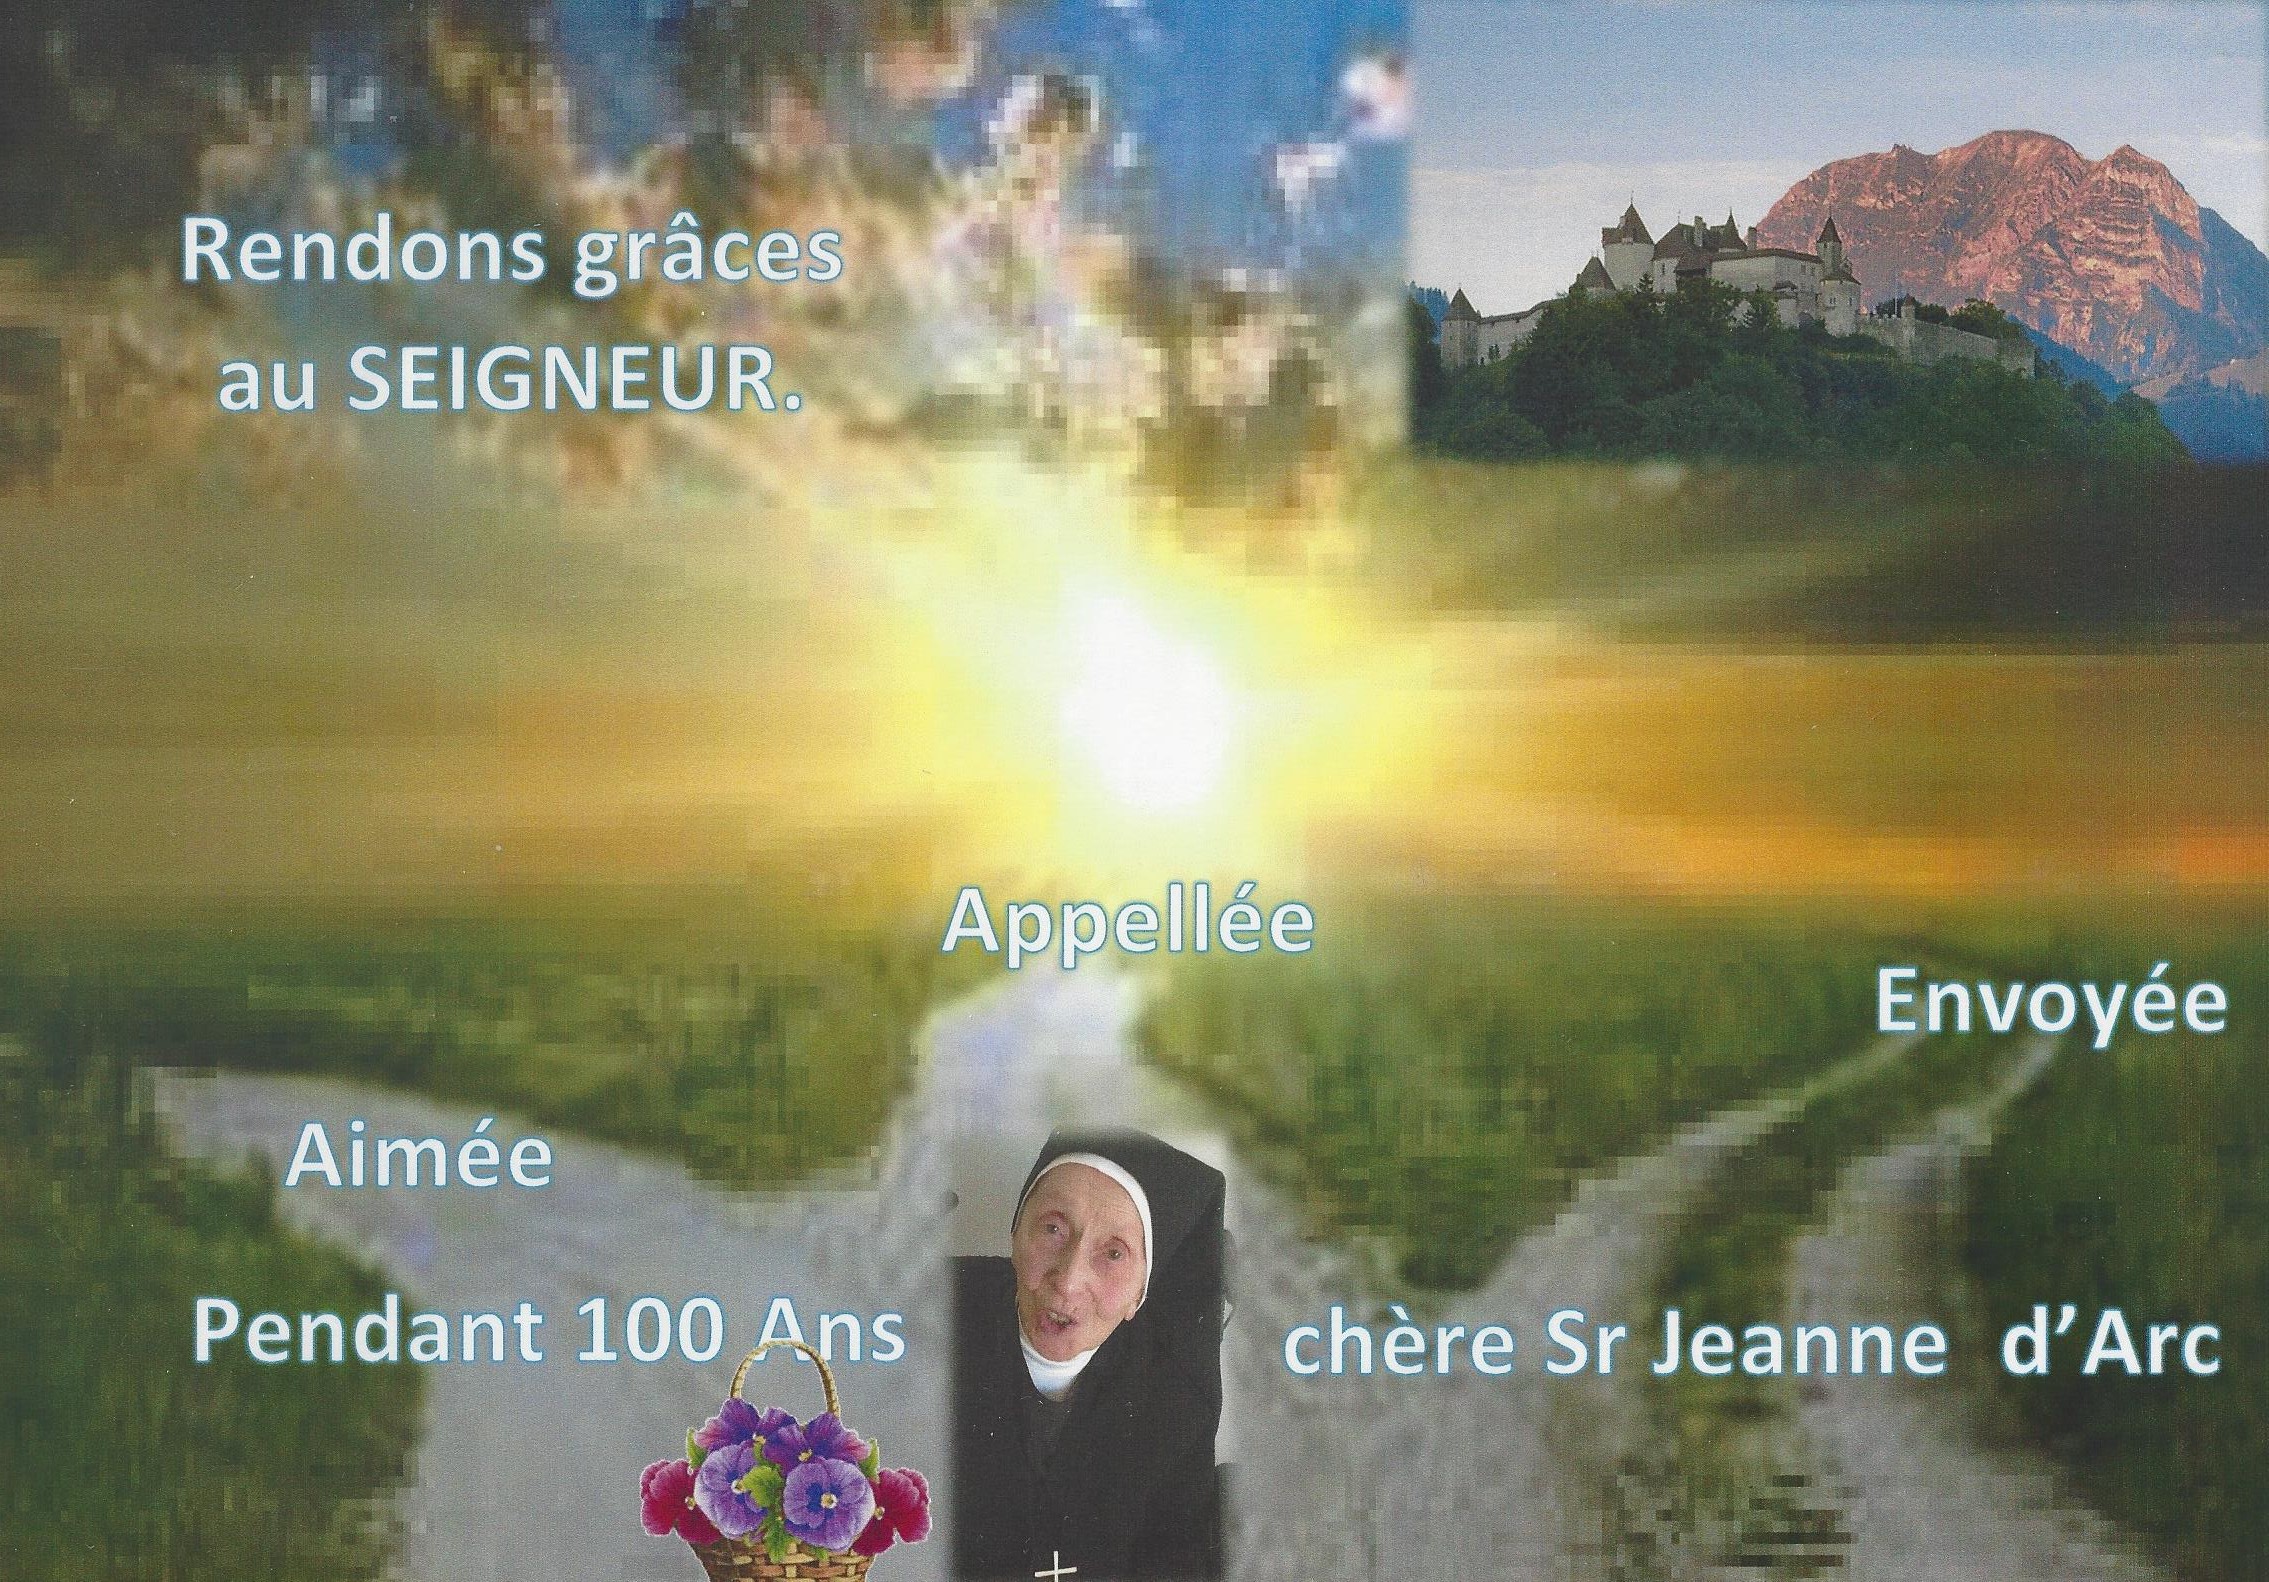 Sr Jeanne d’Arc a 100 ans